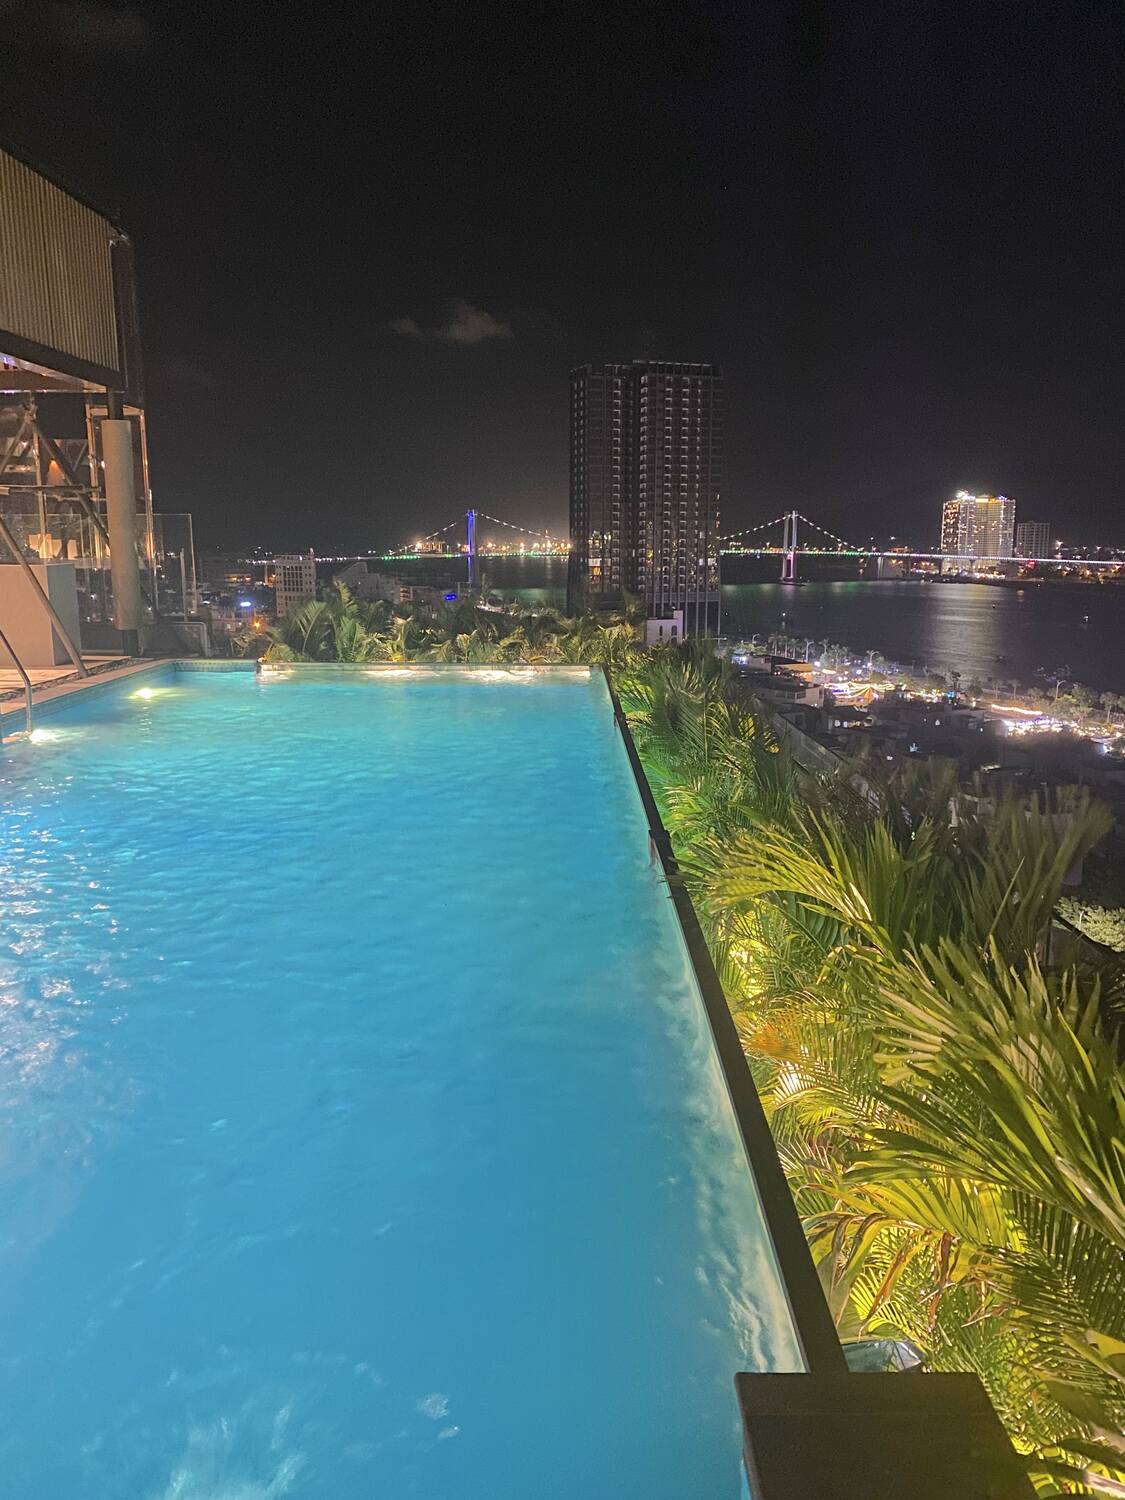 Nighttime poolside view at a sky bar in da nang